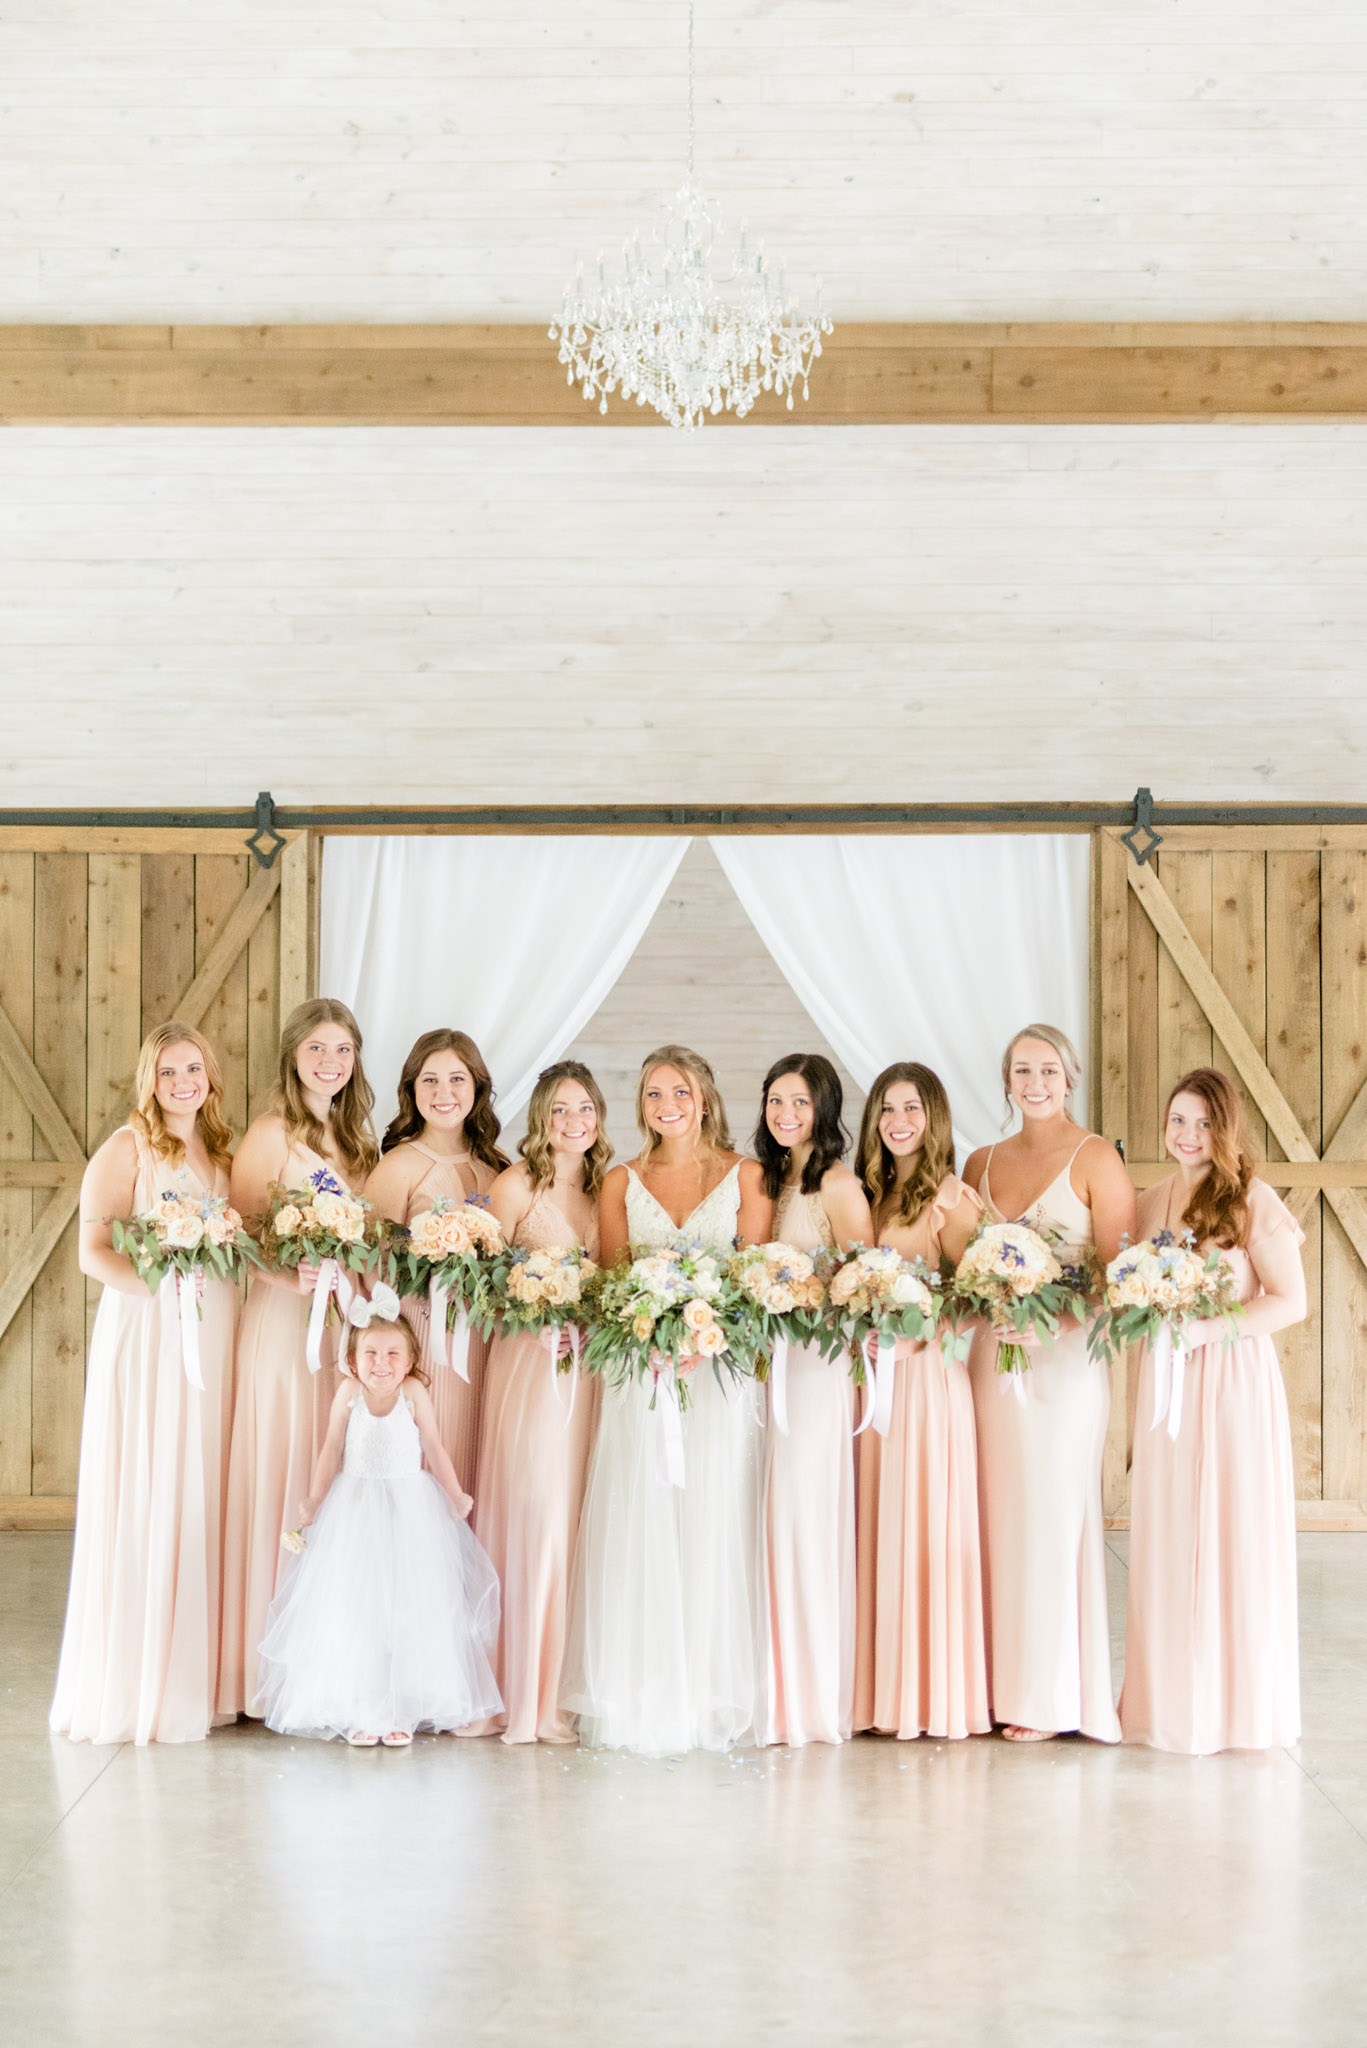 Bride and bridesmaids smile at camera under chandelier.